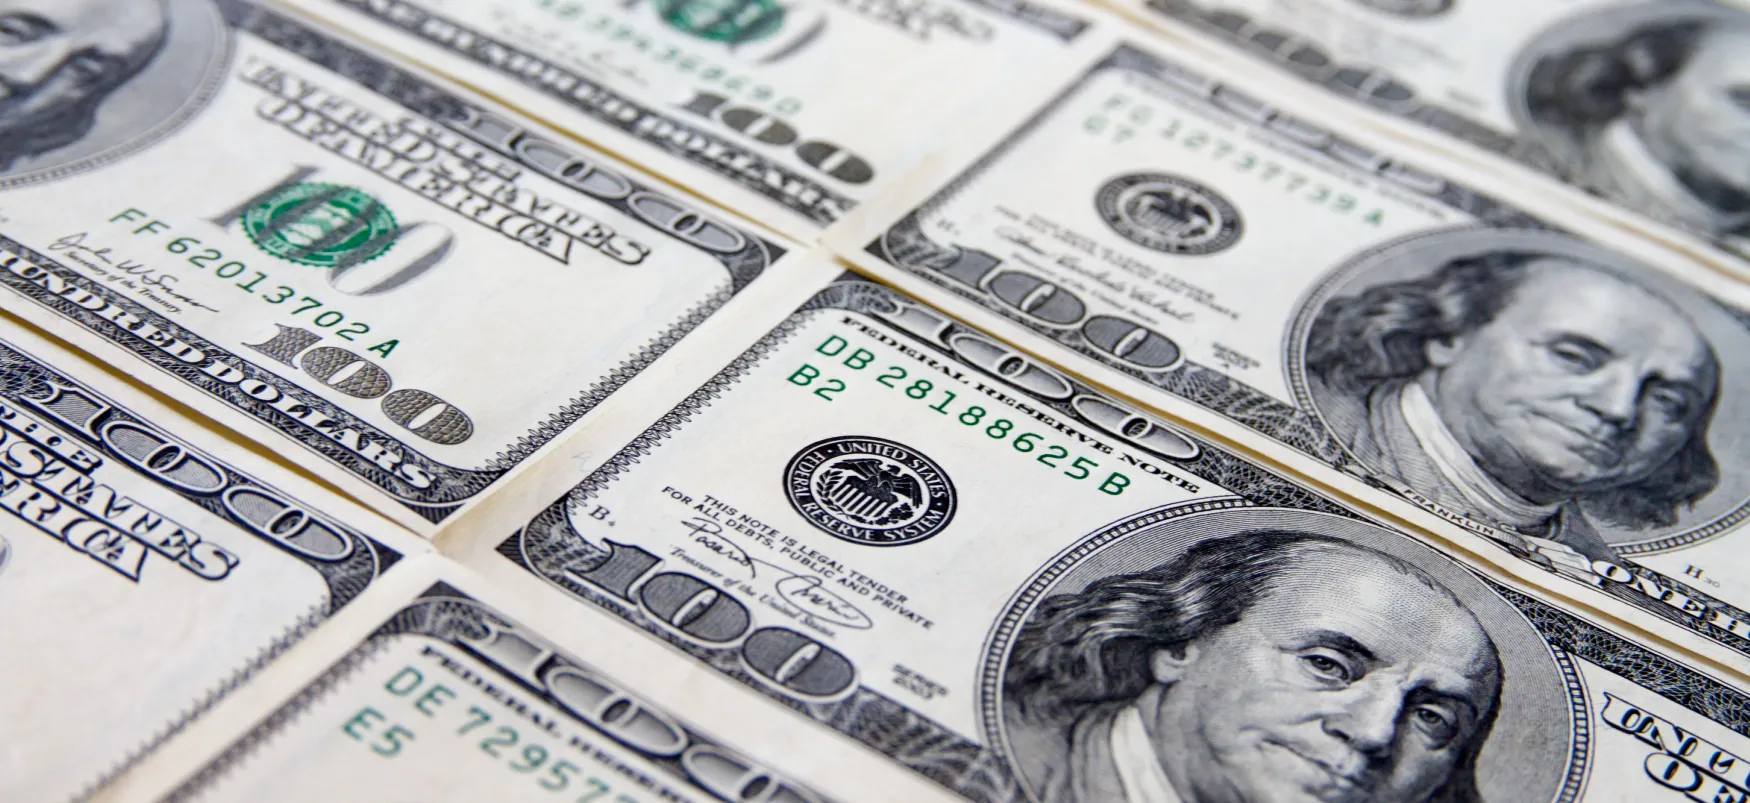 Close-up of stacks of hundred dollar bills.